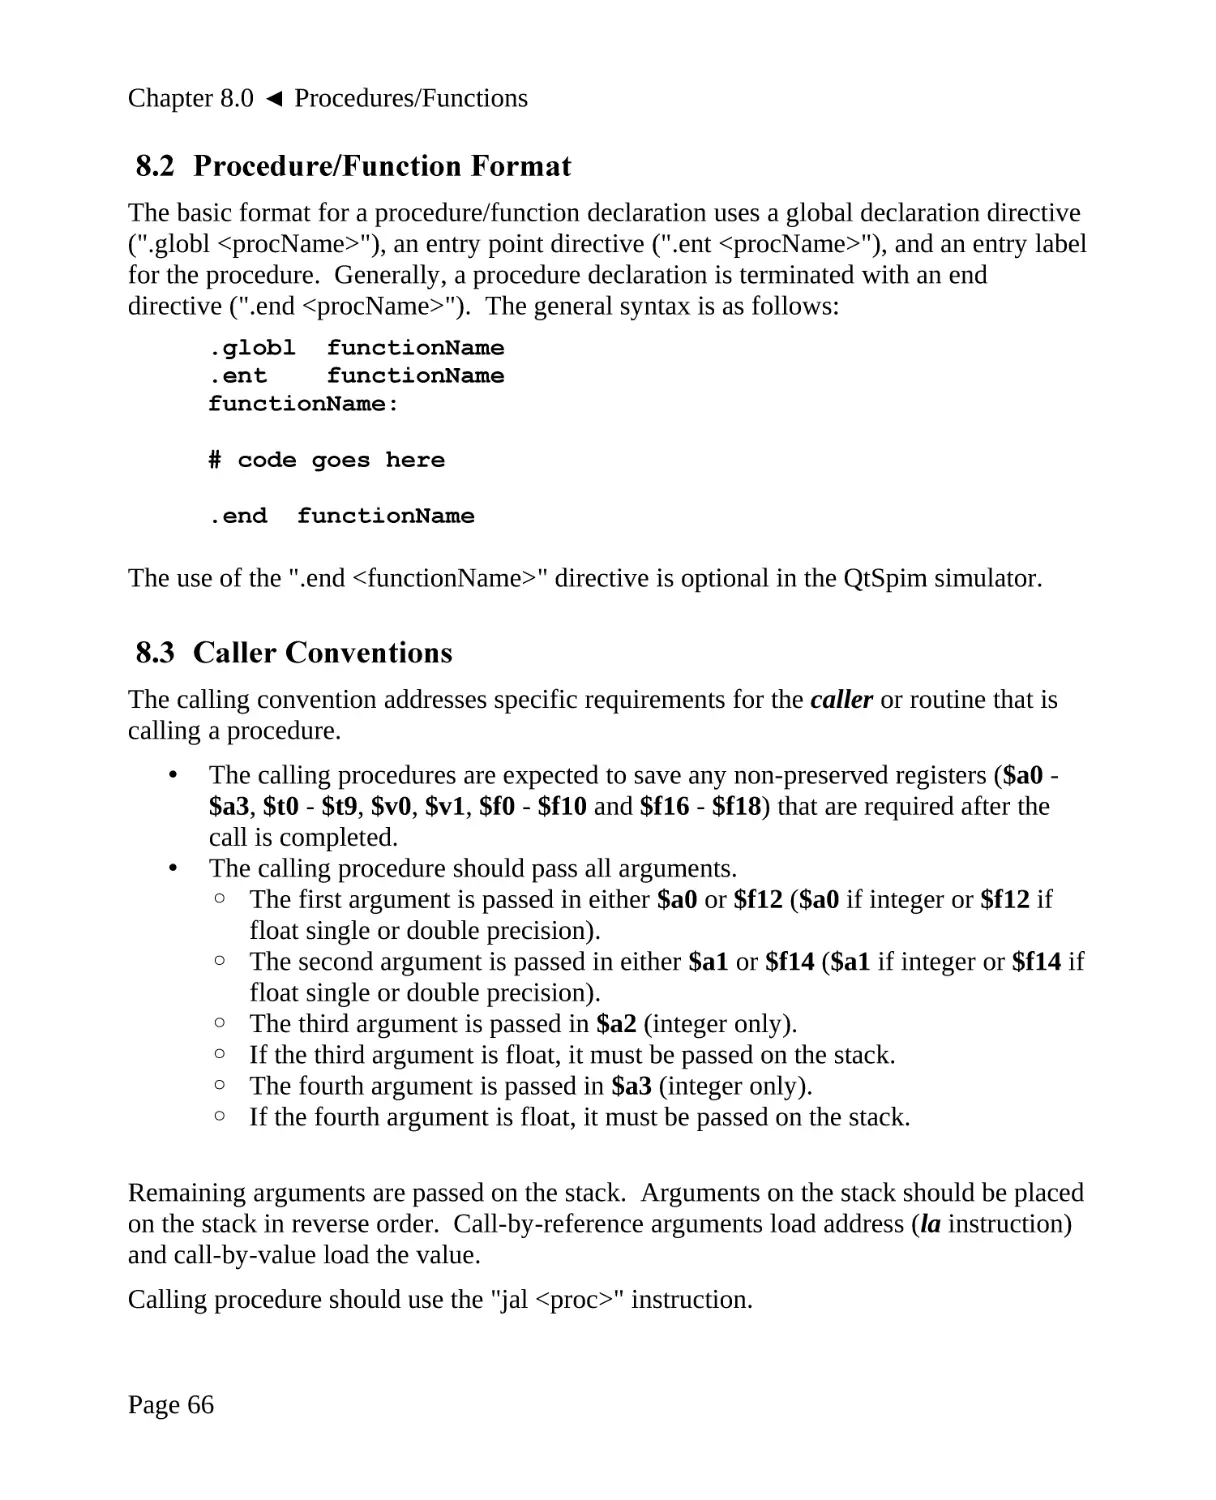 8.2 Procedure/Function Format
8.3 Caller Conventions